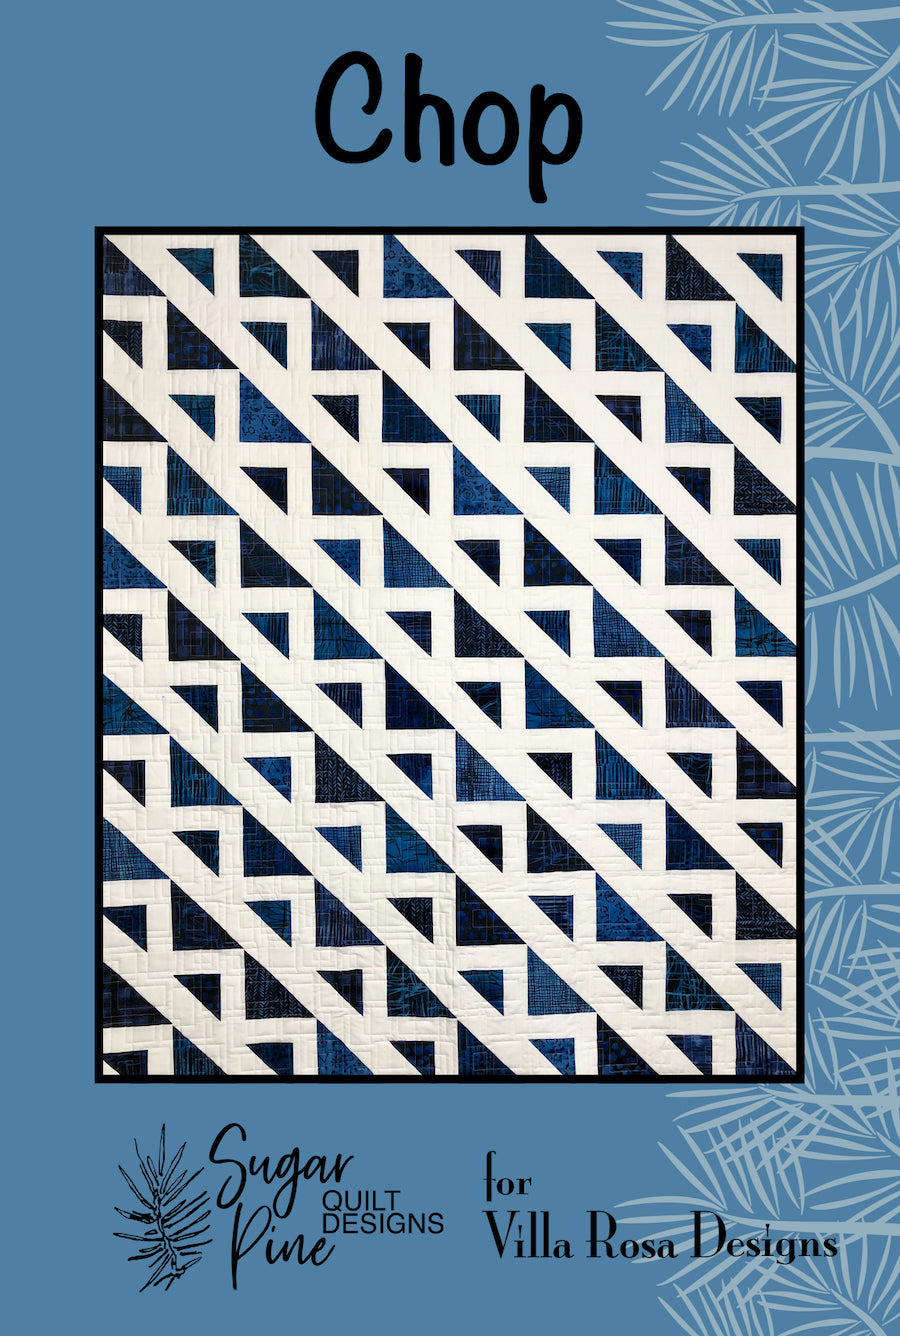 Chop PDF Quilt Pattern by Villa Rosa Designs